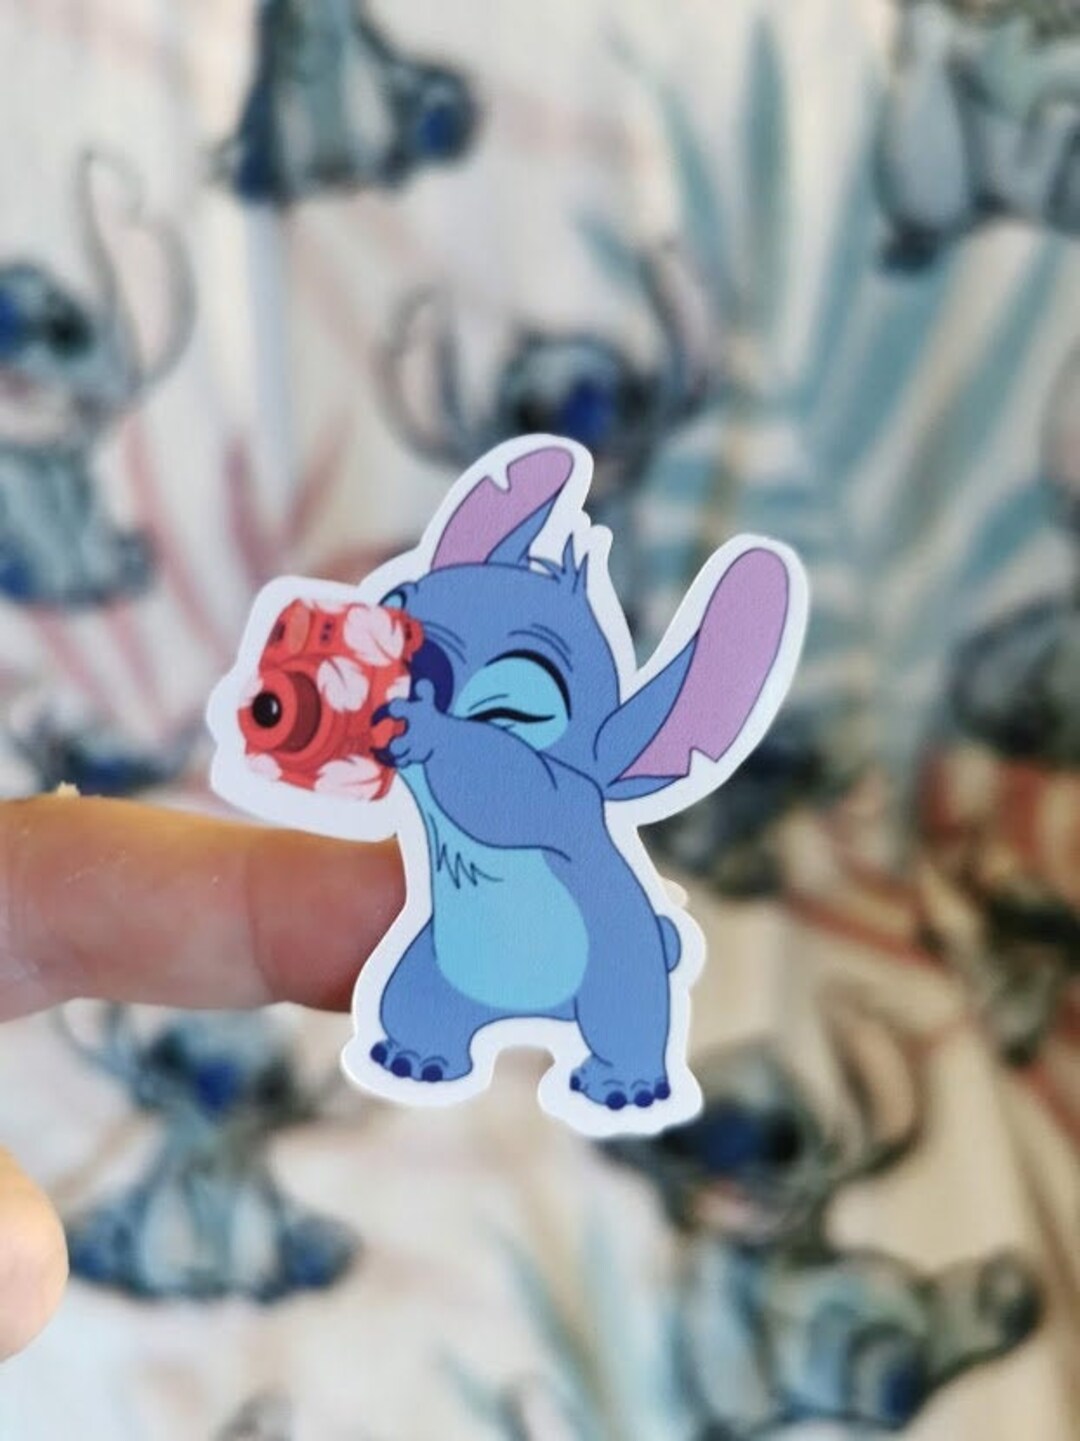 Disney Stickers: Stitch on the App Store